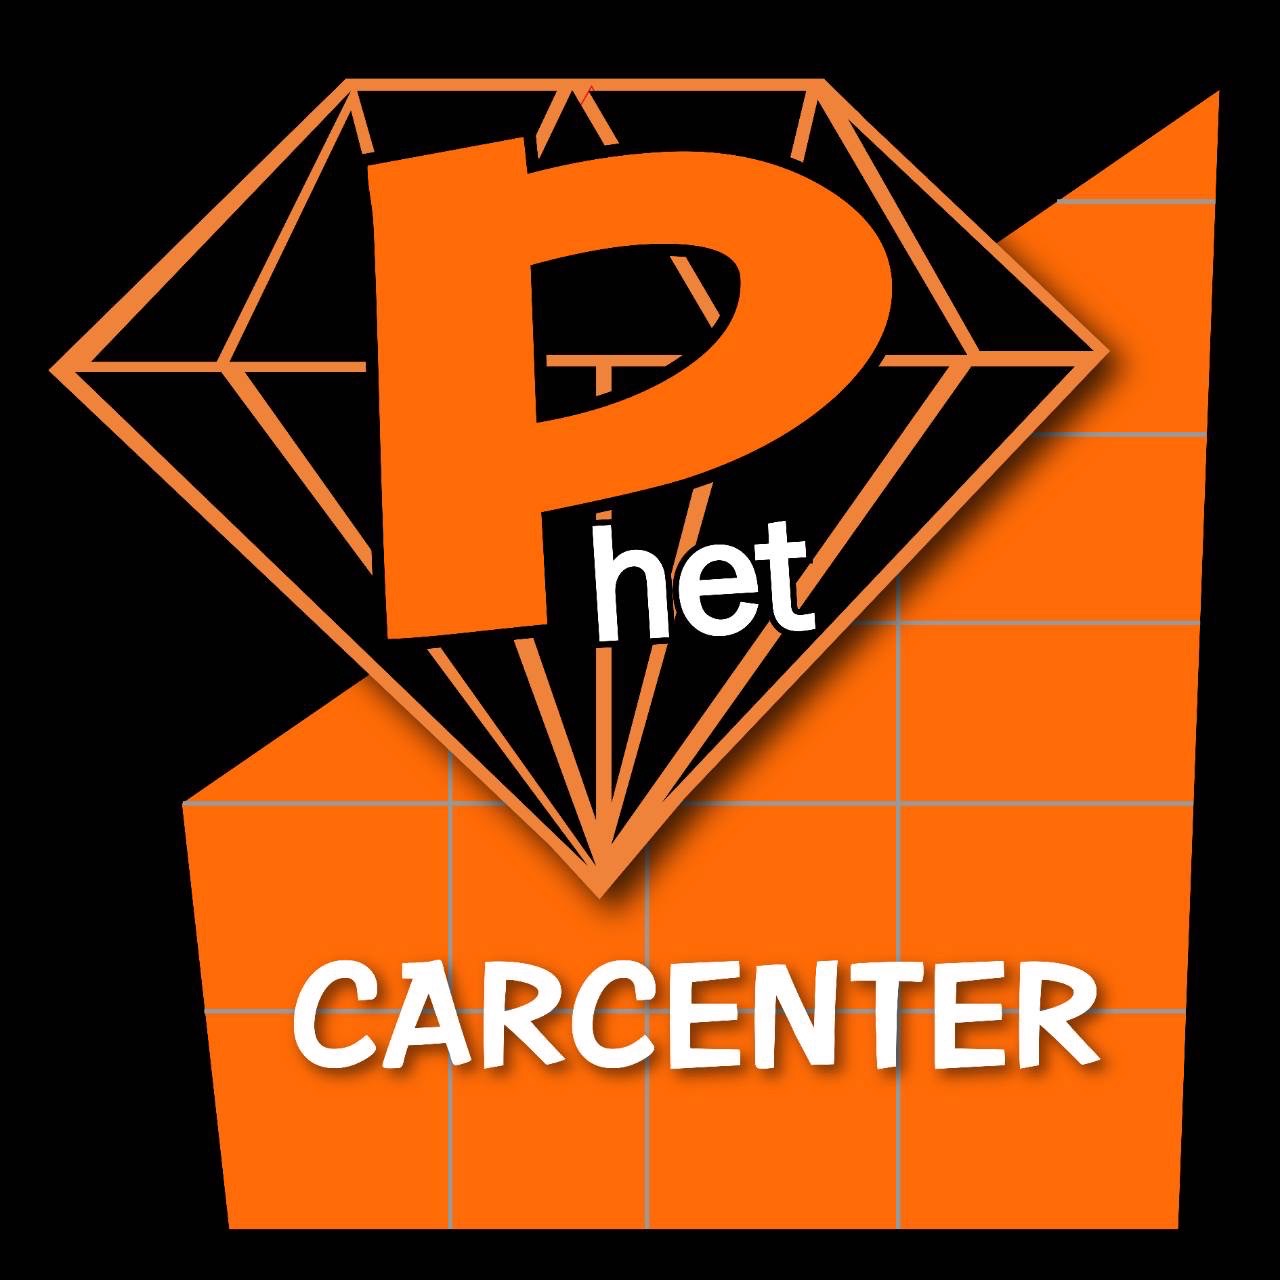 Phetcar Center 79 Co.,Ltd